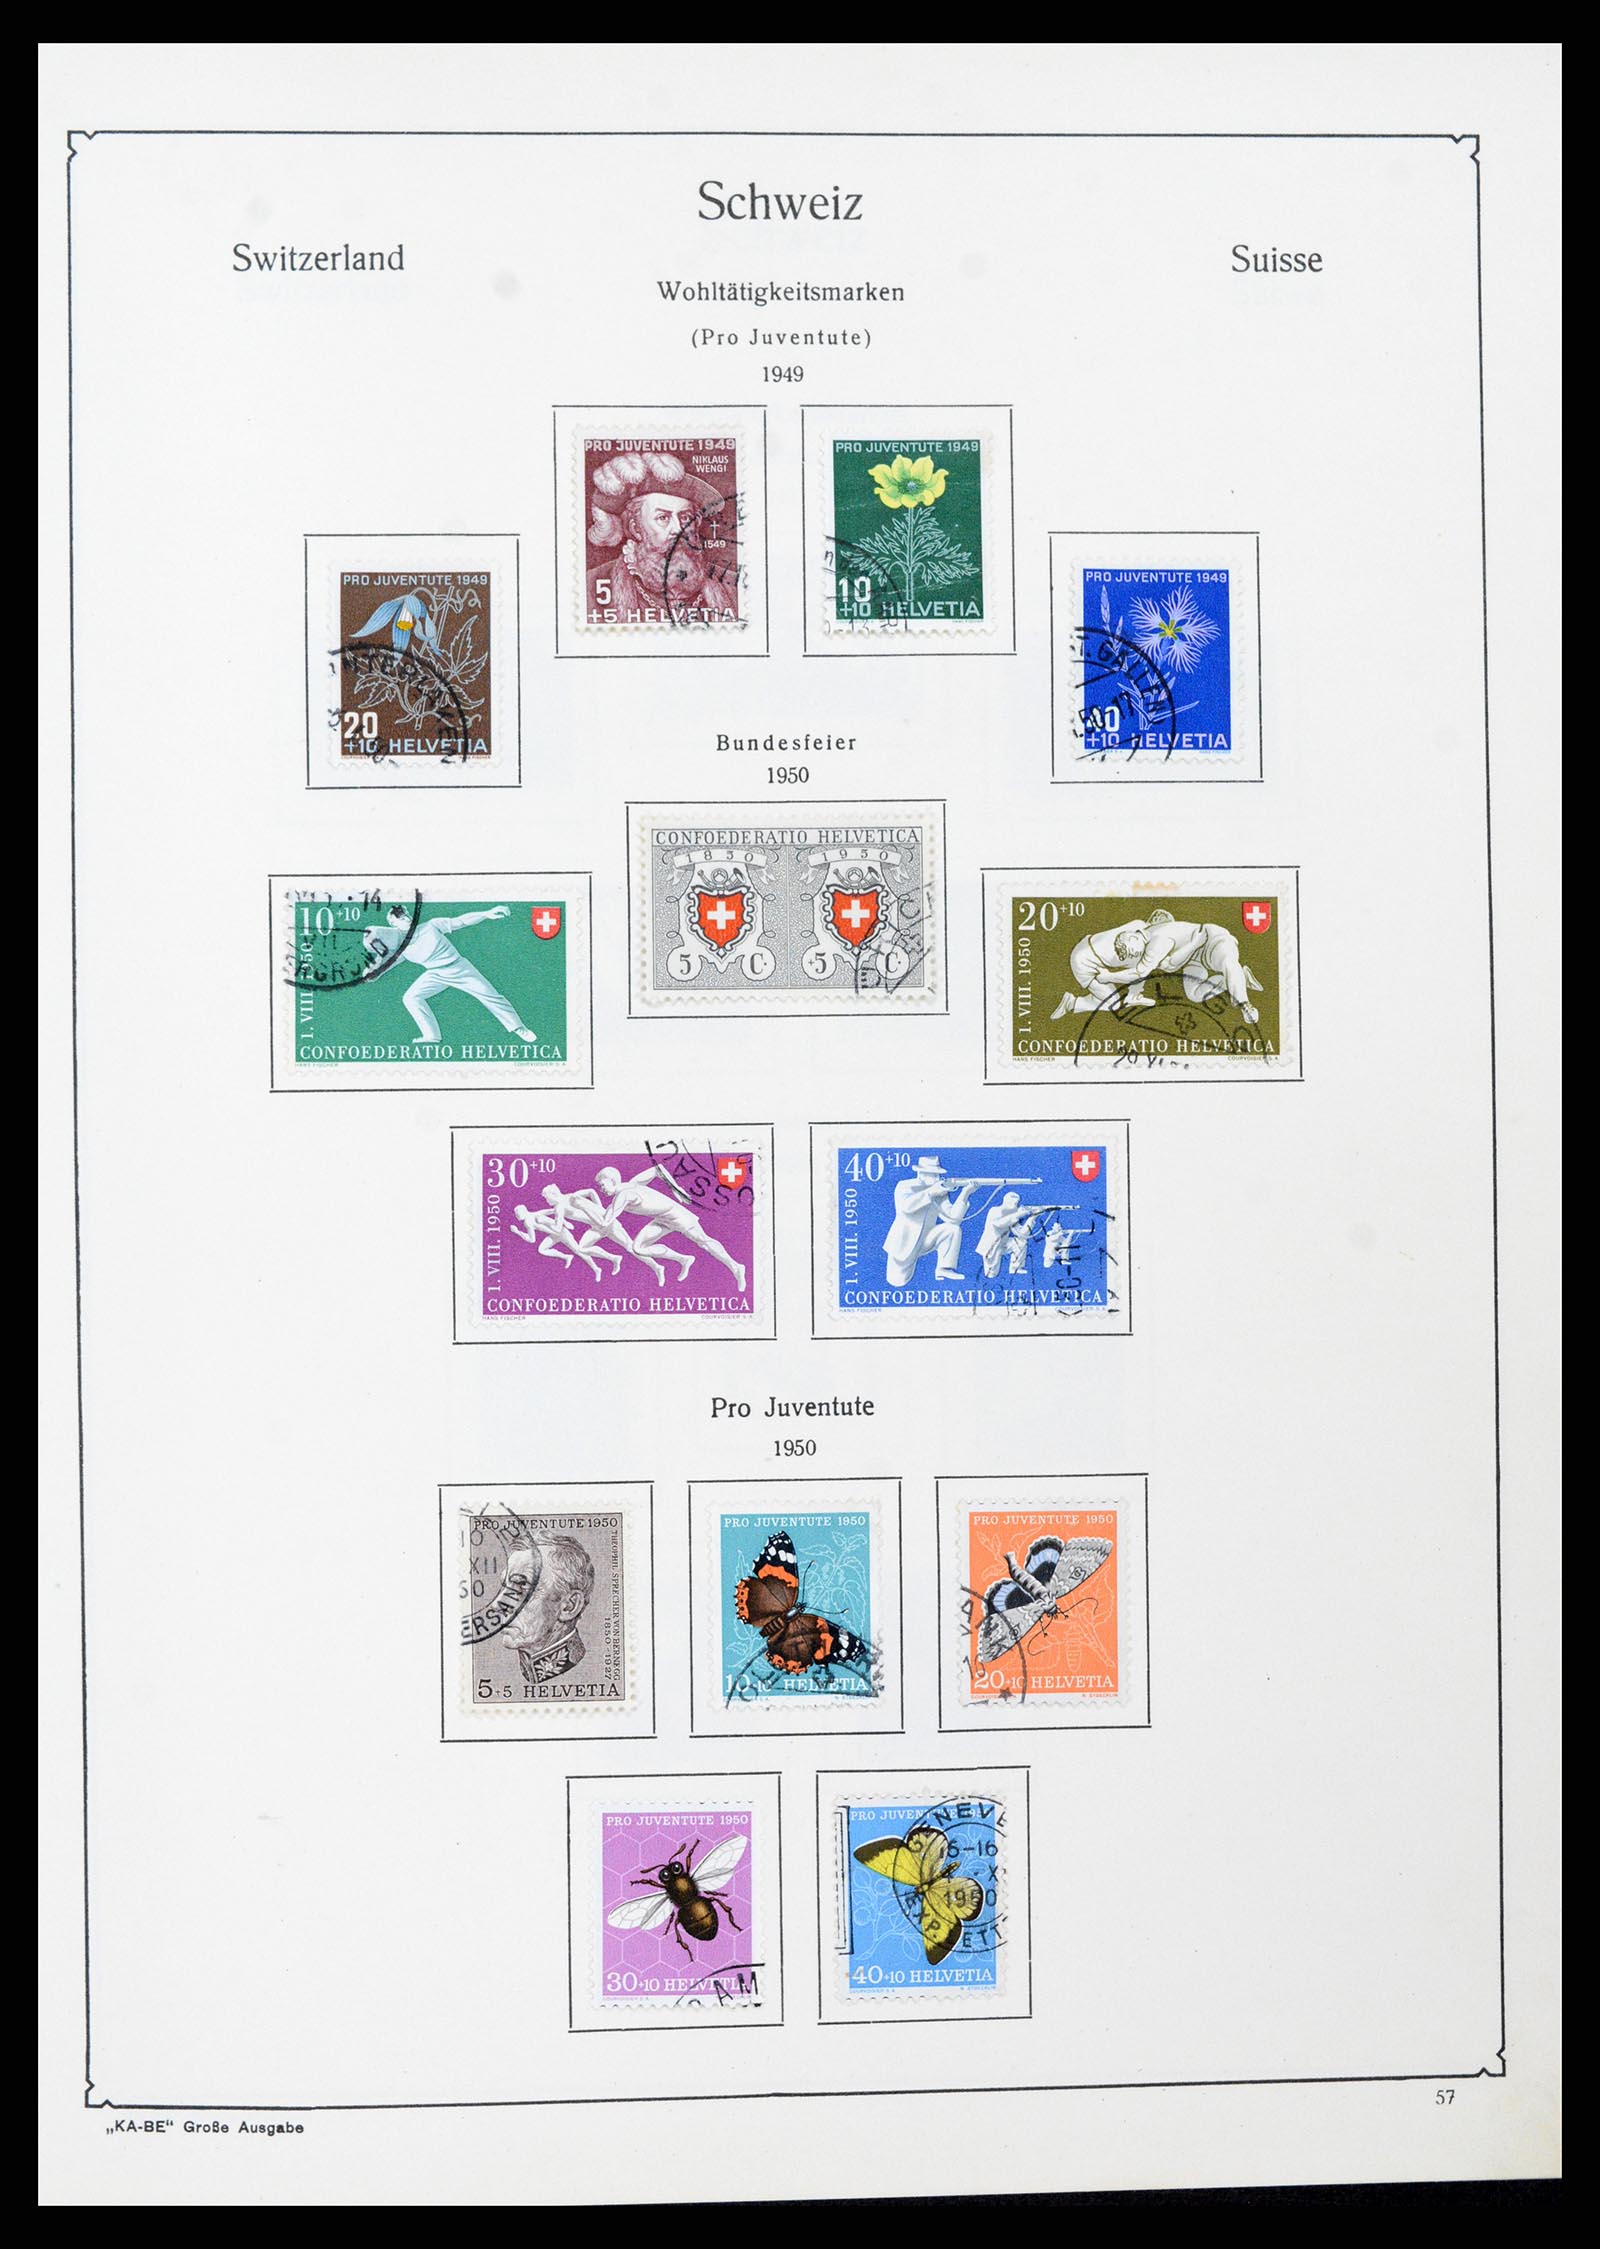 37588 054 - Stamp collection 37588 Switzerland 1854-1974.